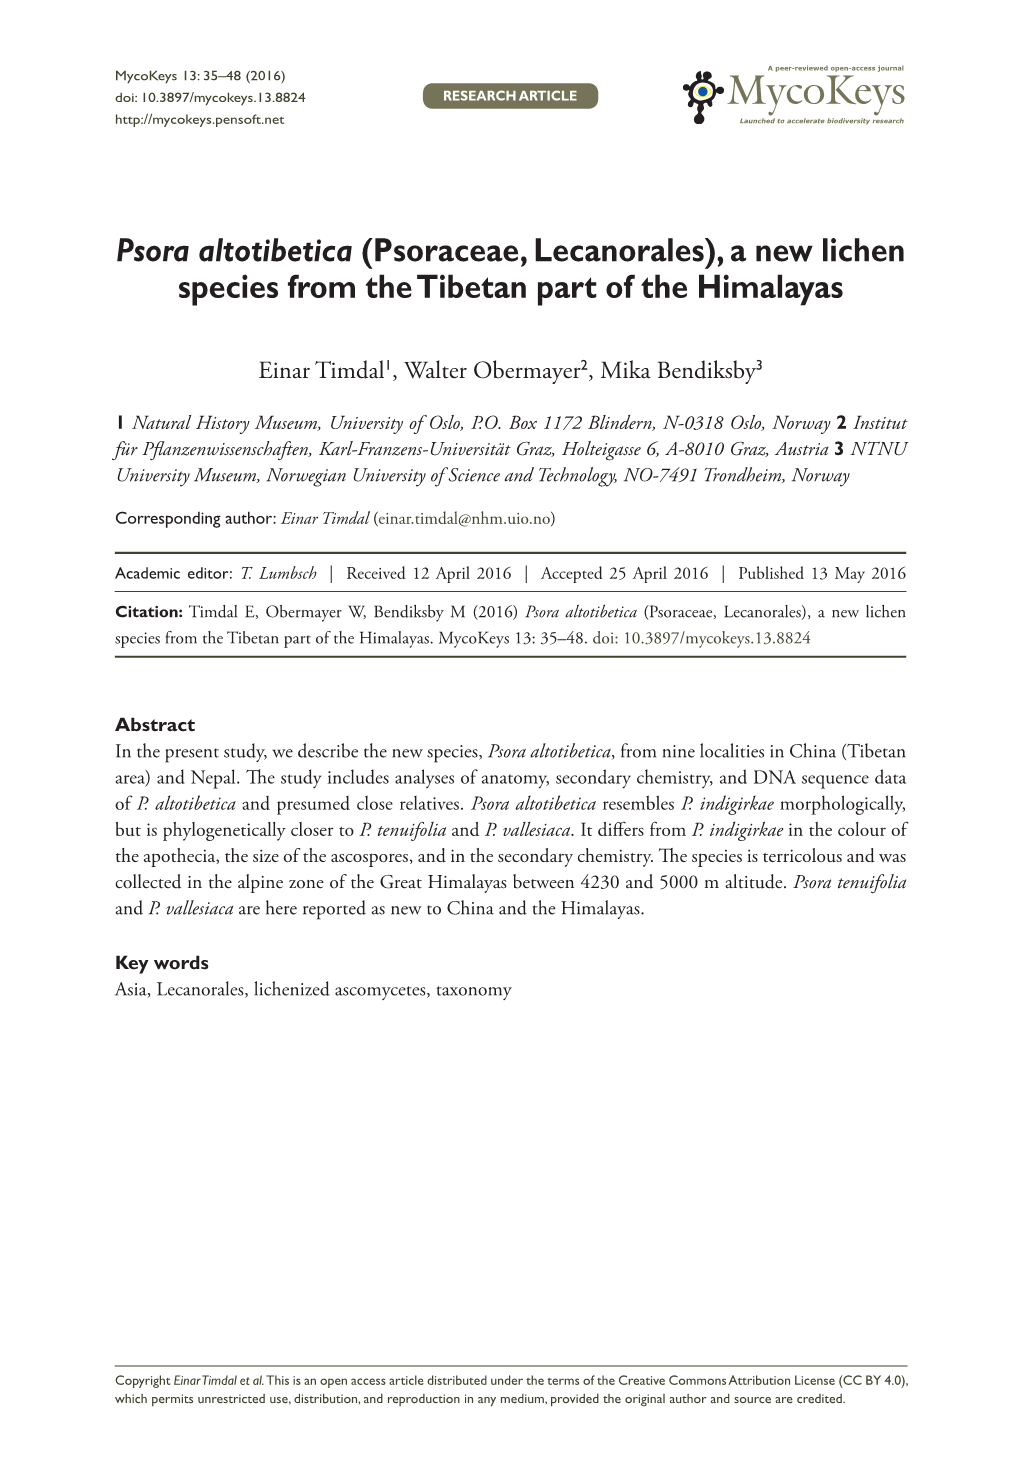 Psora Altotibetica (Psoraceae, Lecanorales), a New Lichen Species